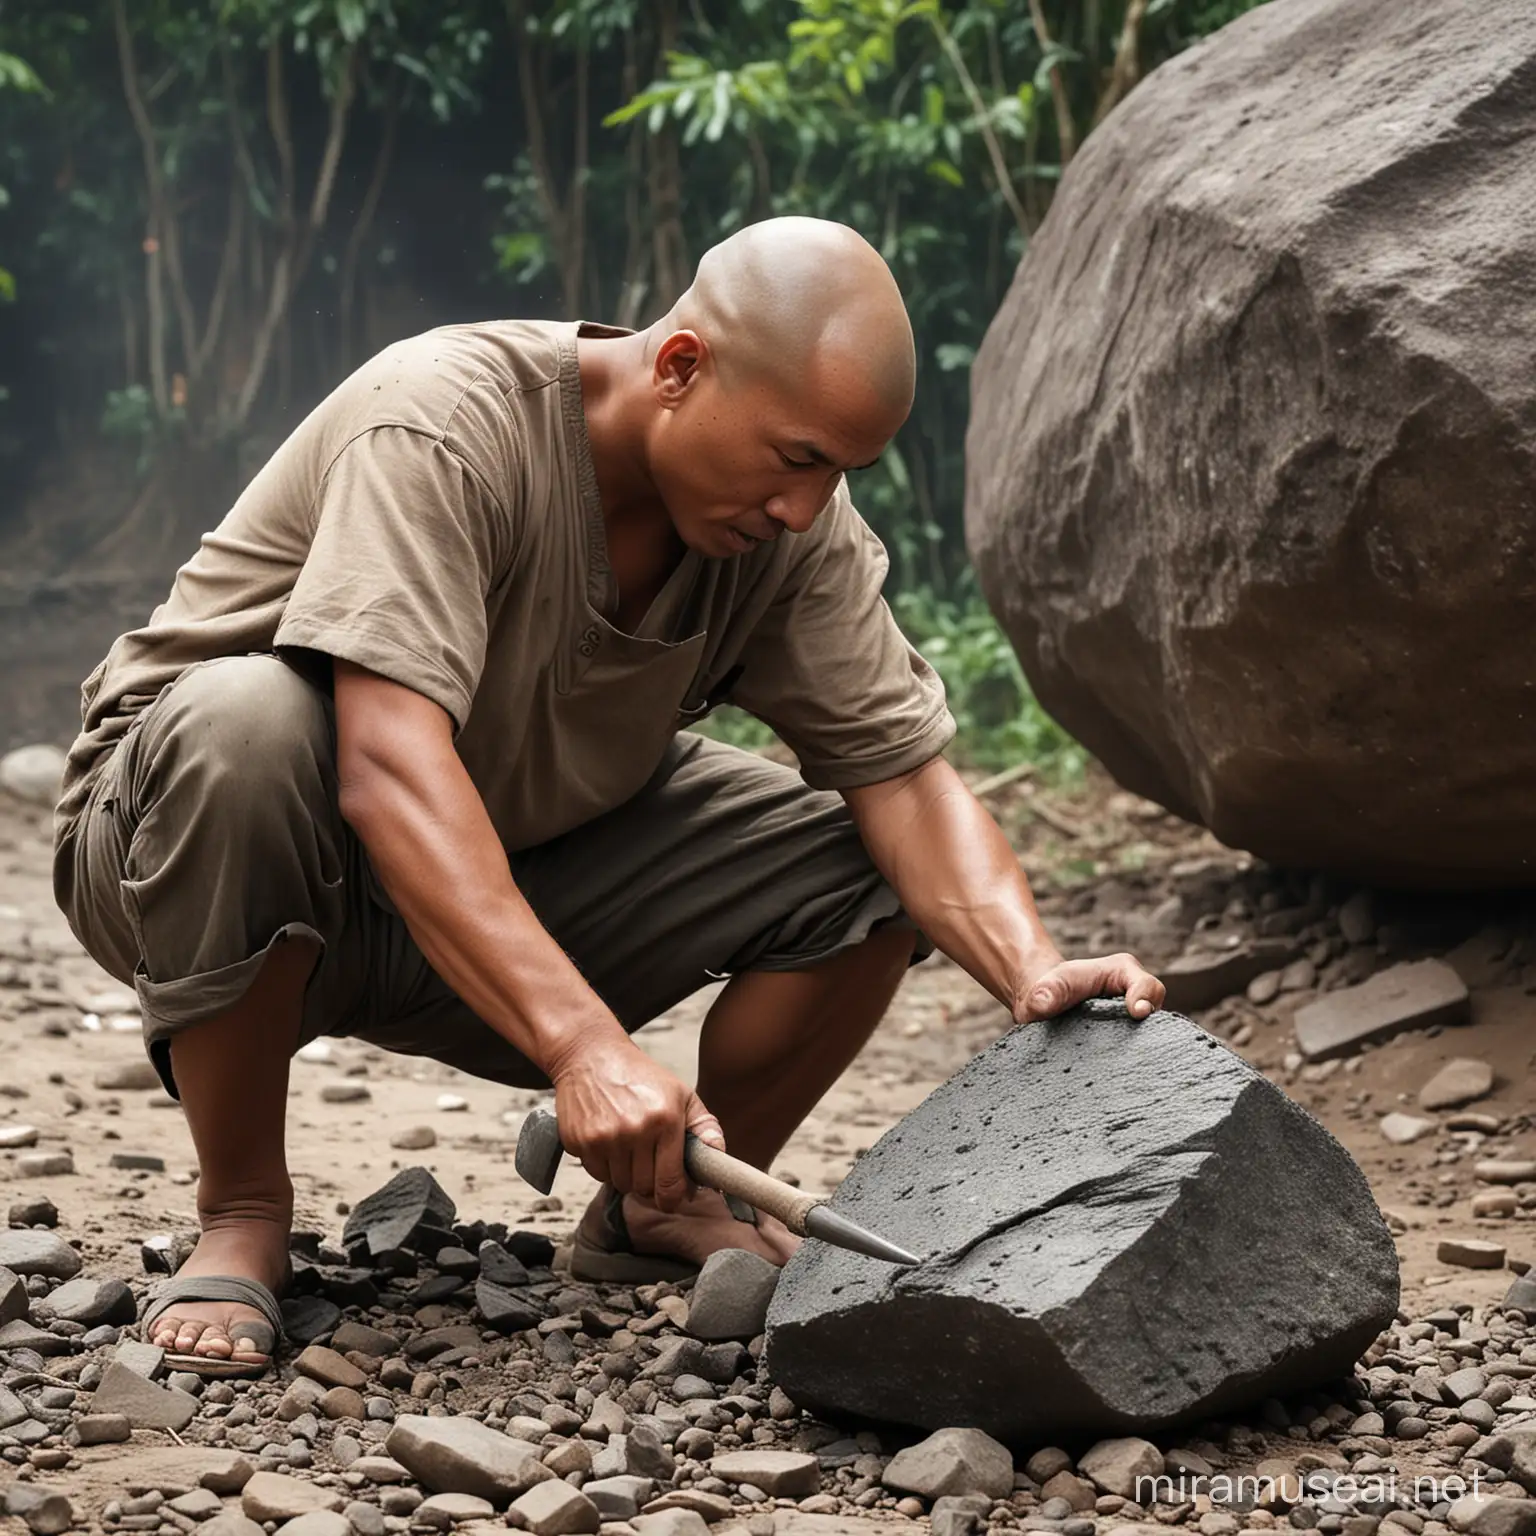 seorang indonesia sedang membelah batu,pakai kampak.kepala botak,nampk realistis